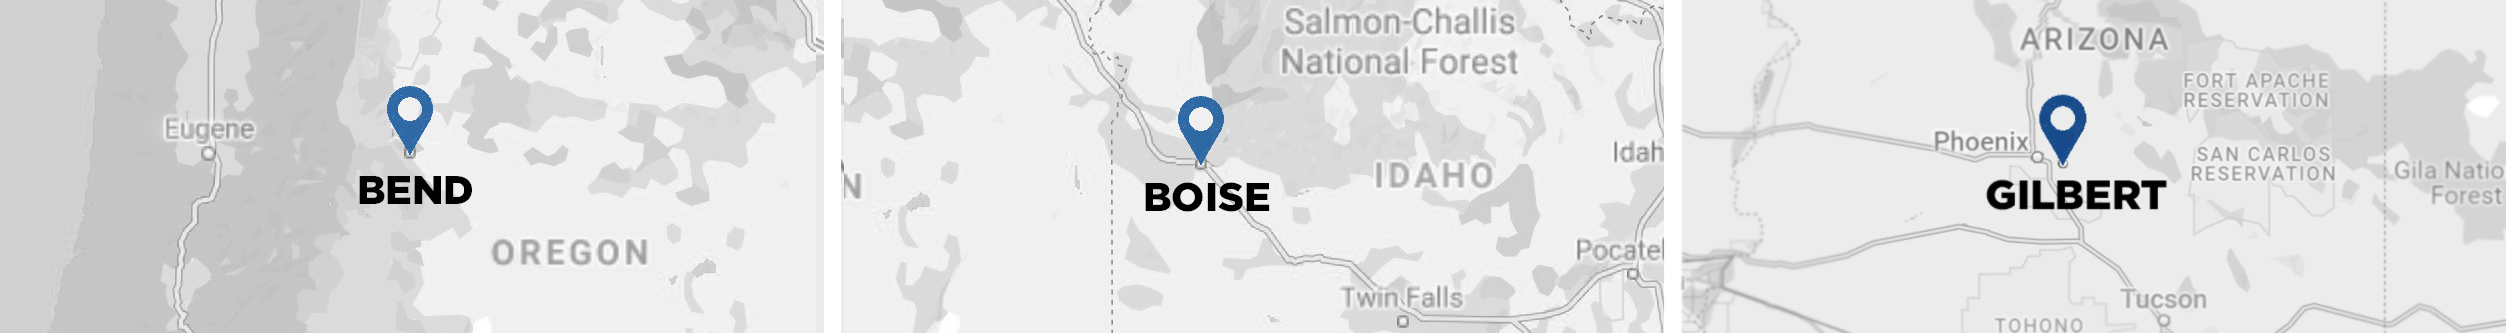 Boise Bend Gilbert Map